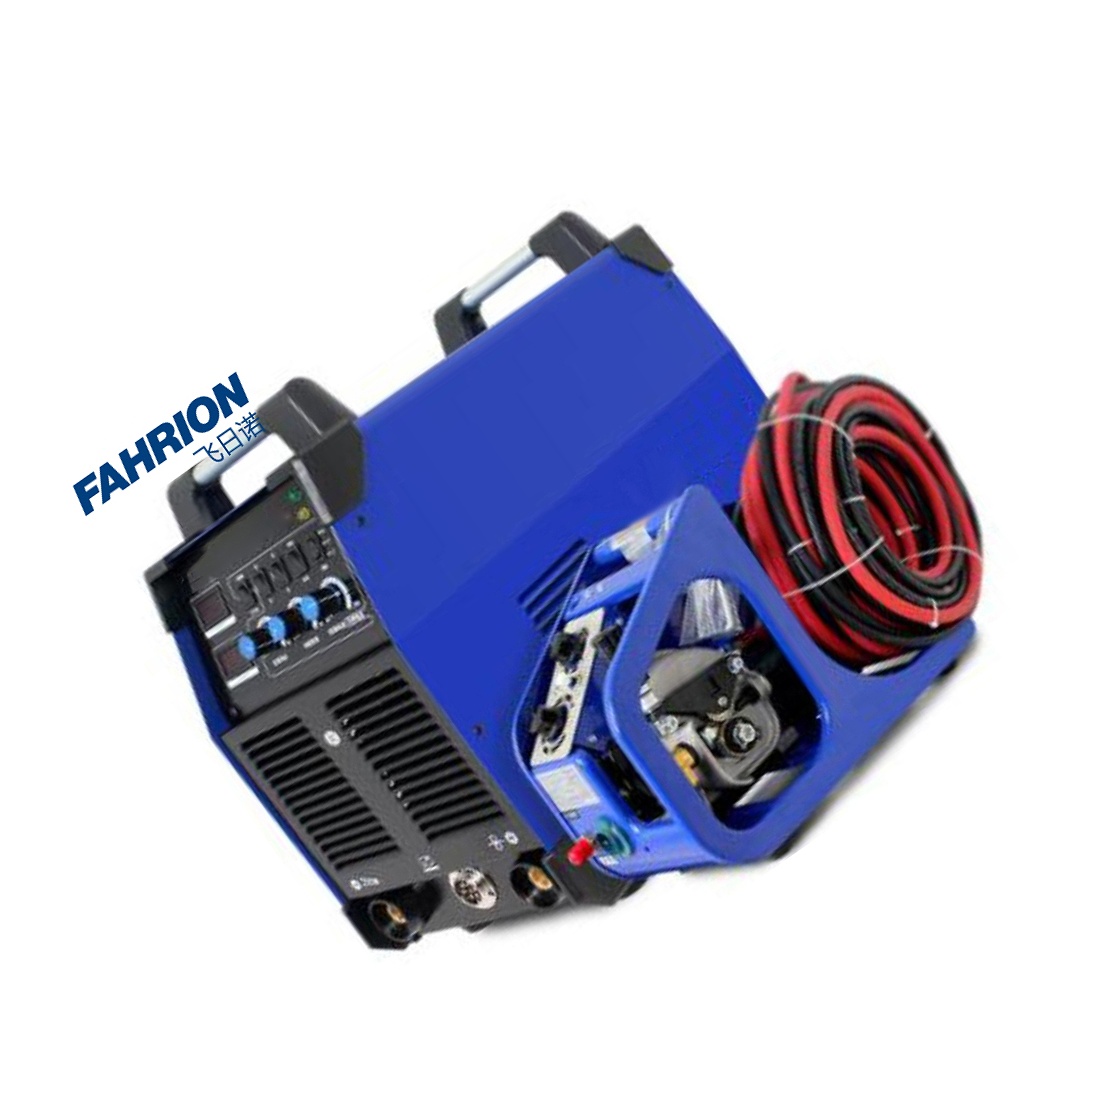 FAHRION 气体保护焊机 GD99-900-2389